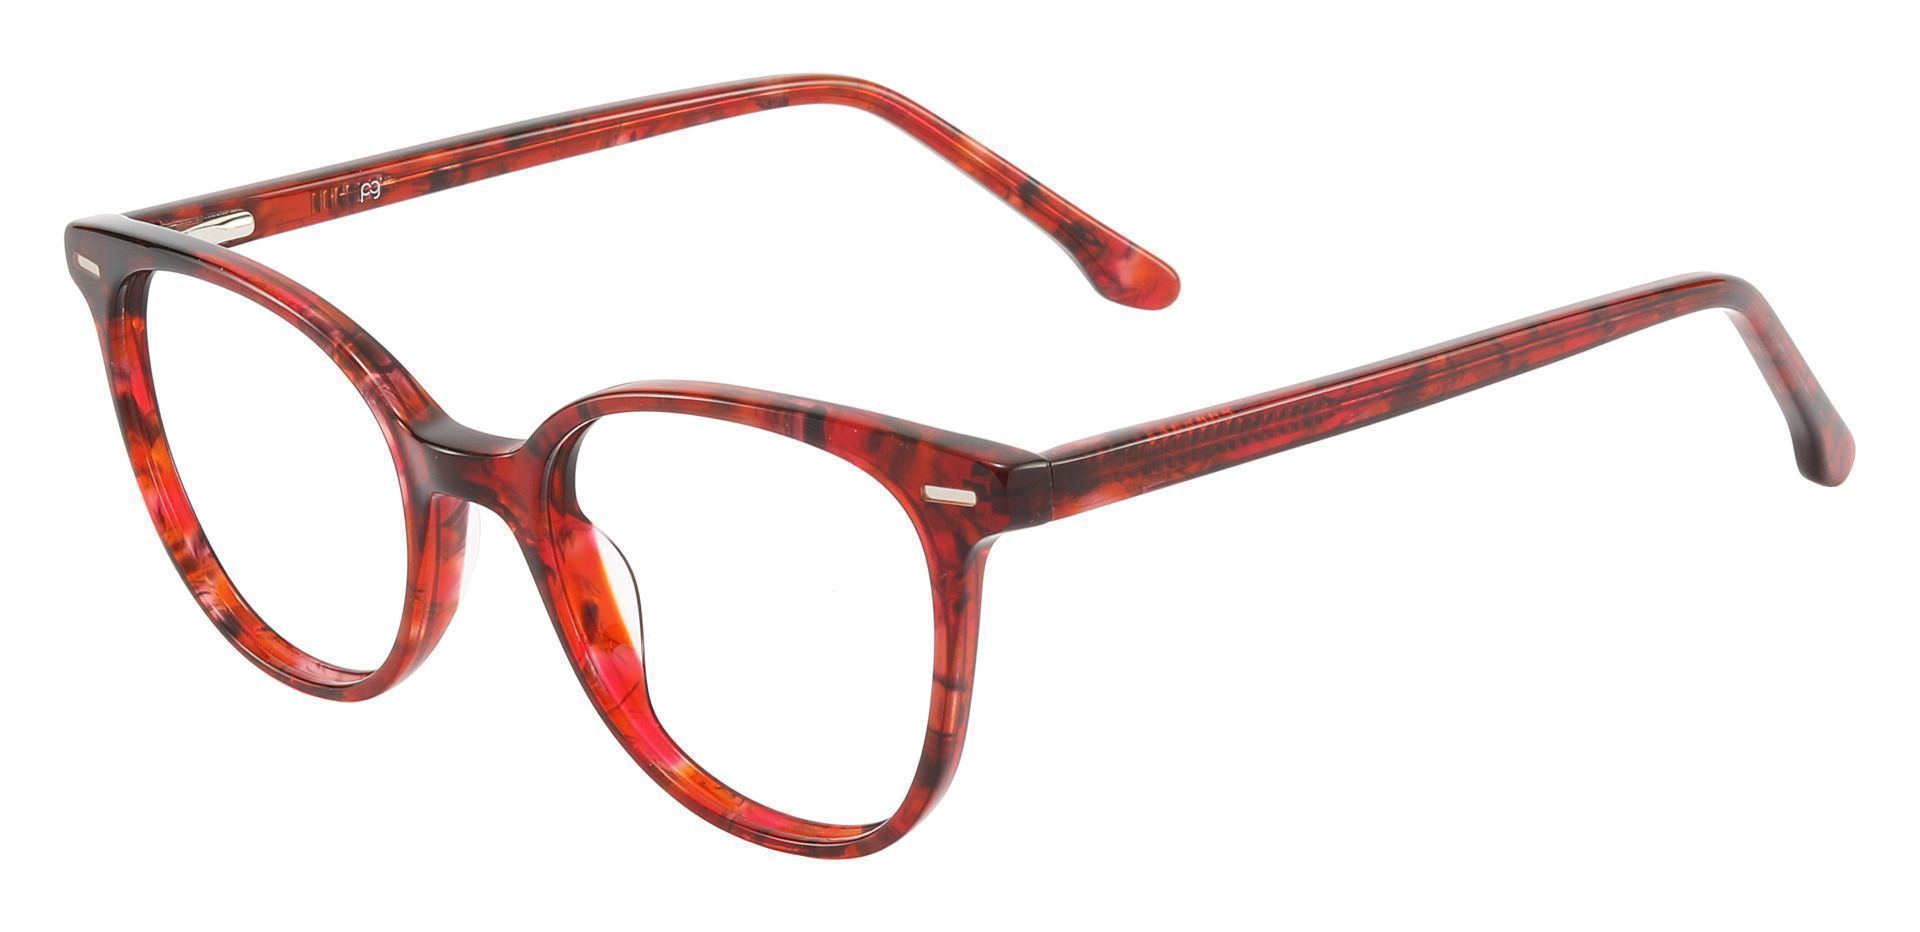 Chili Oval Eyeglasses Frame - Red